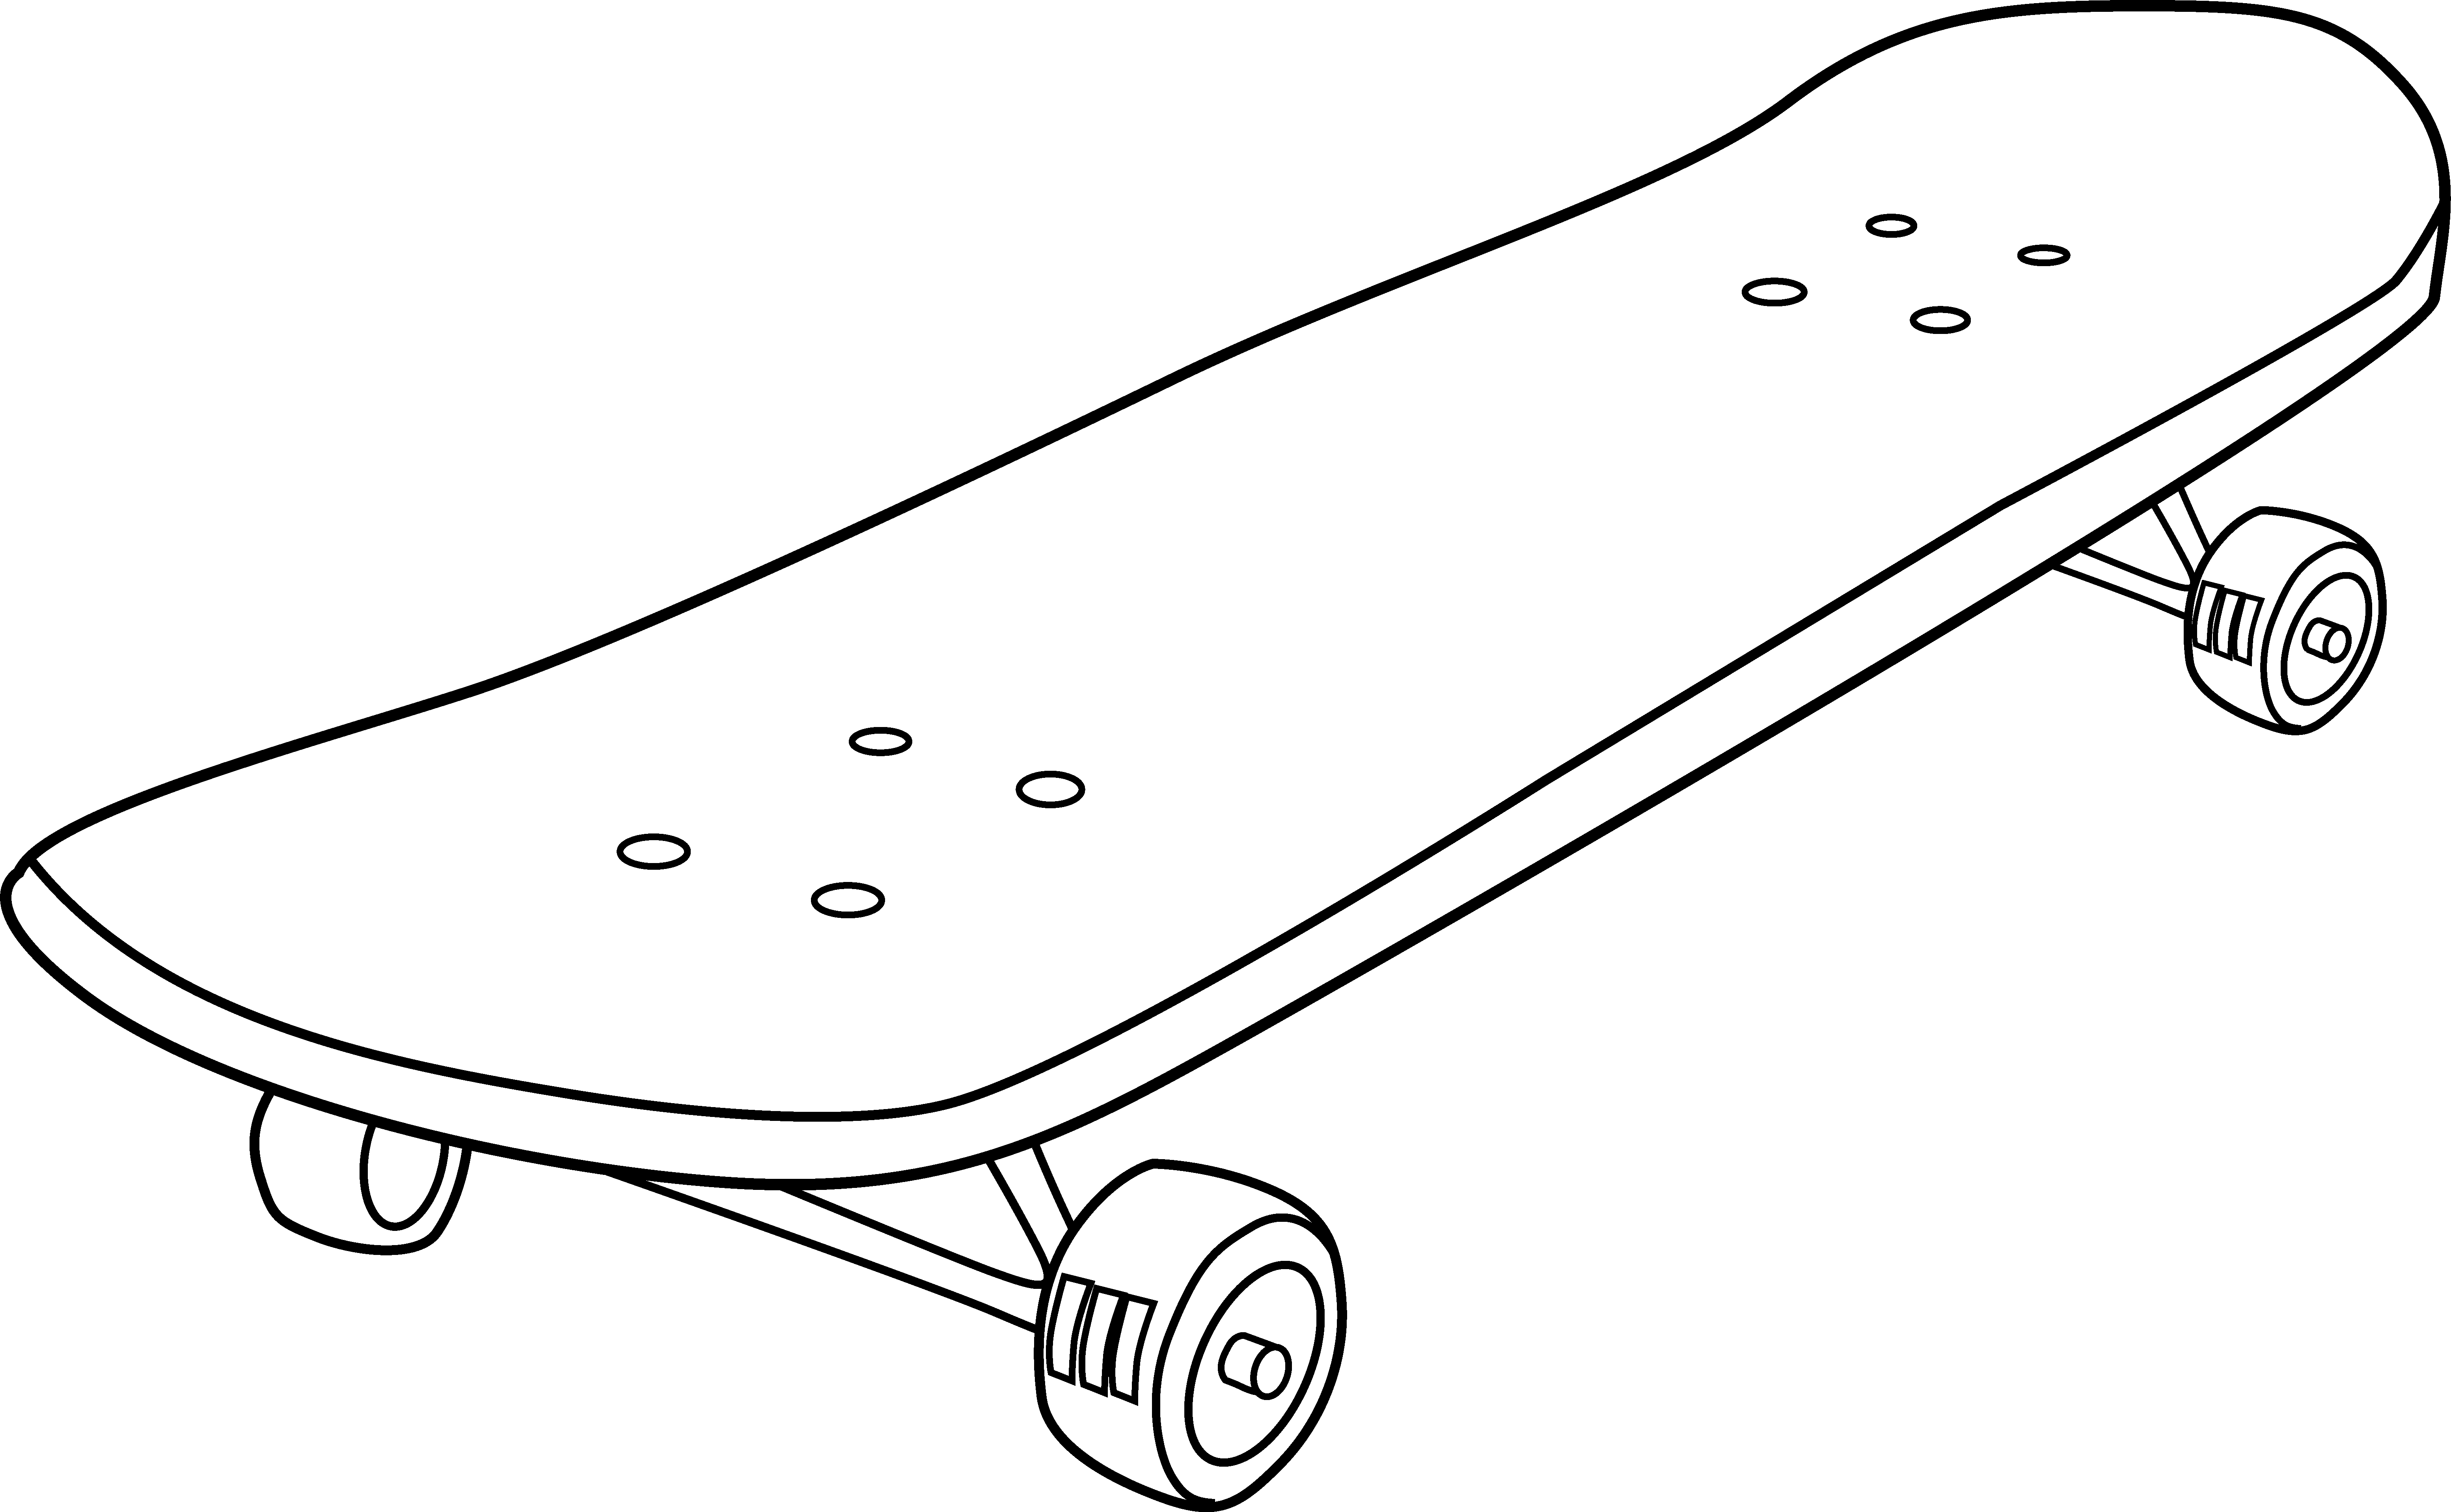 Skateboard clipart 3